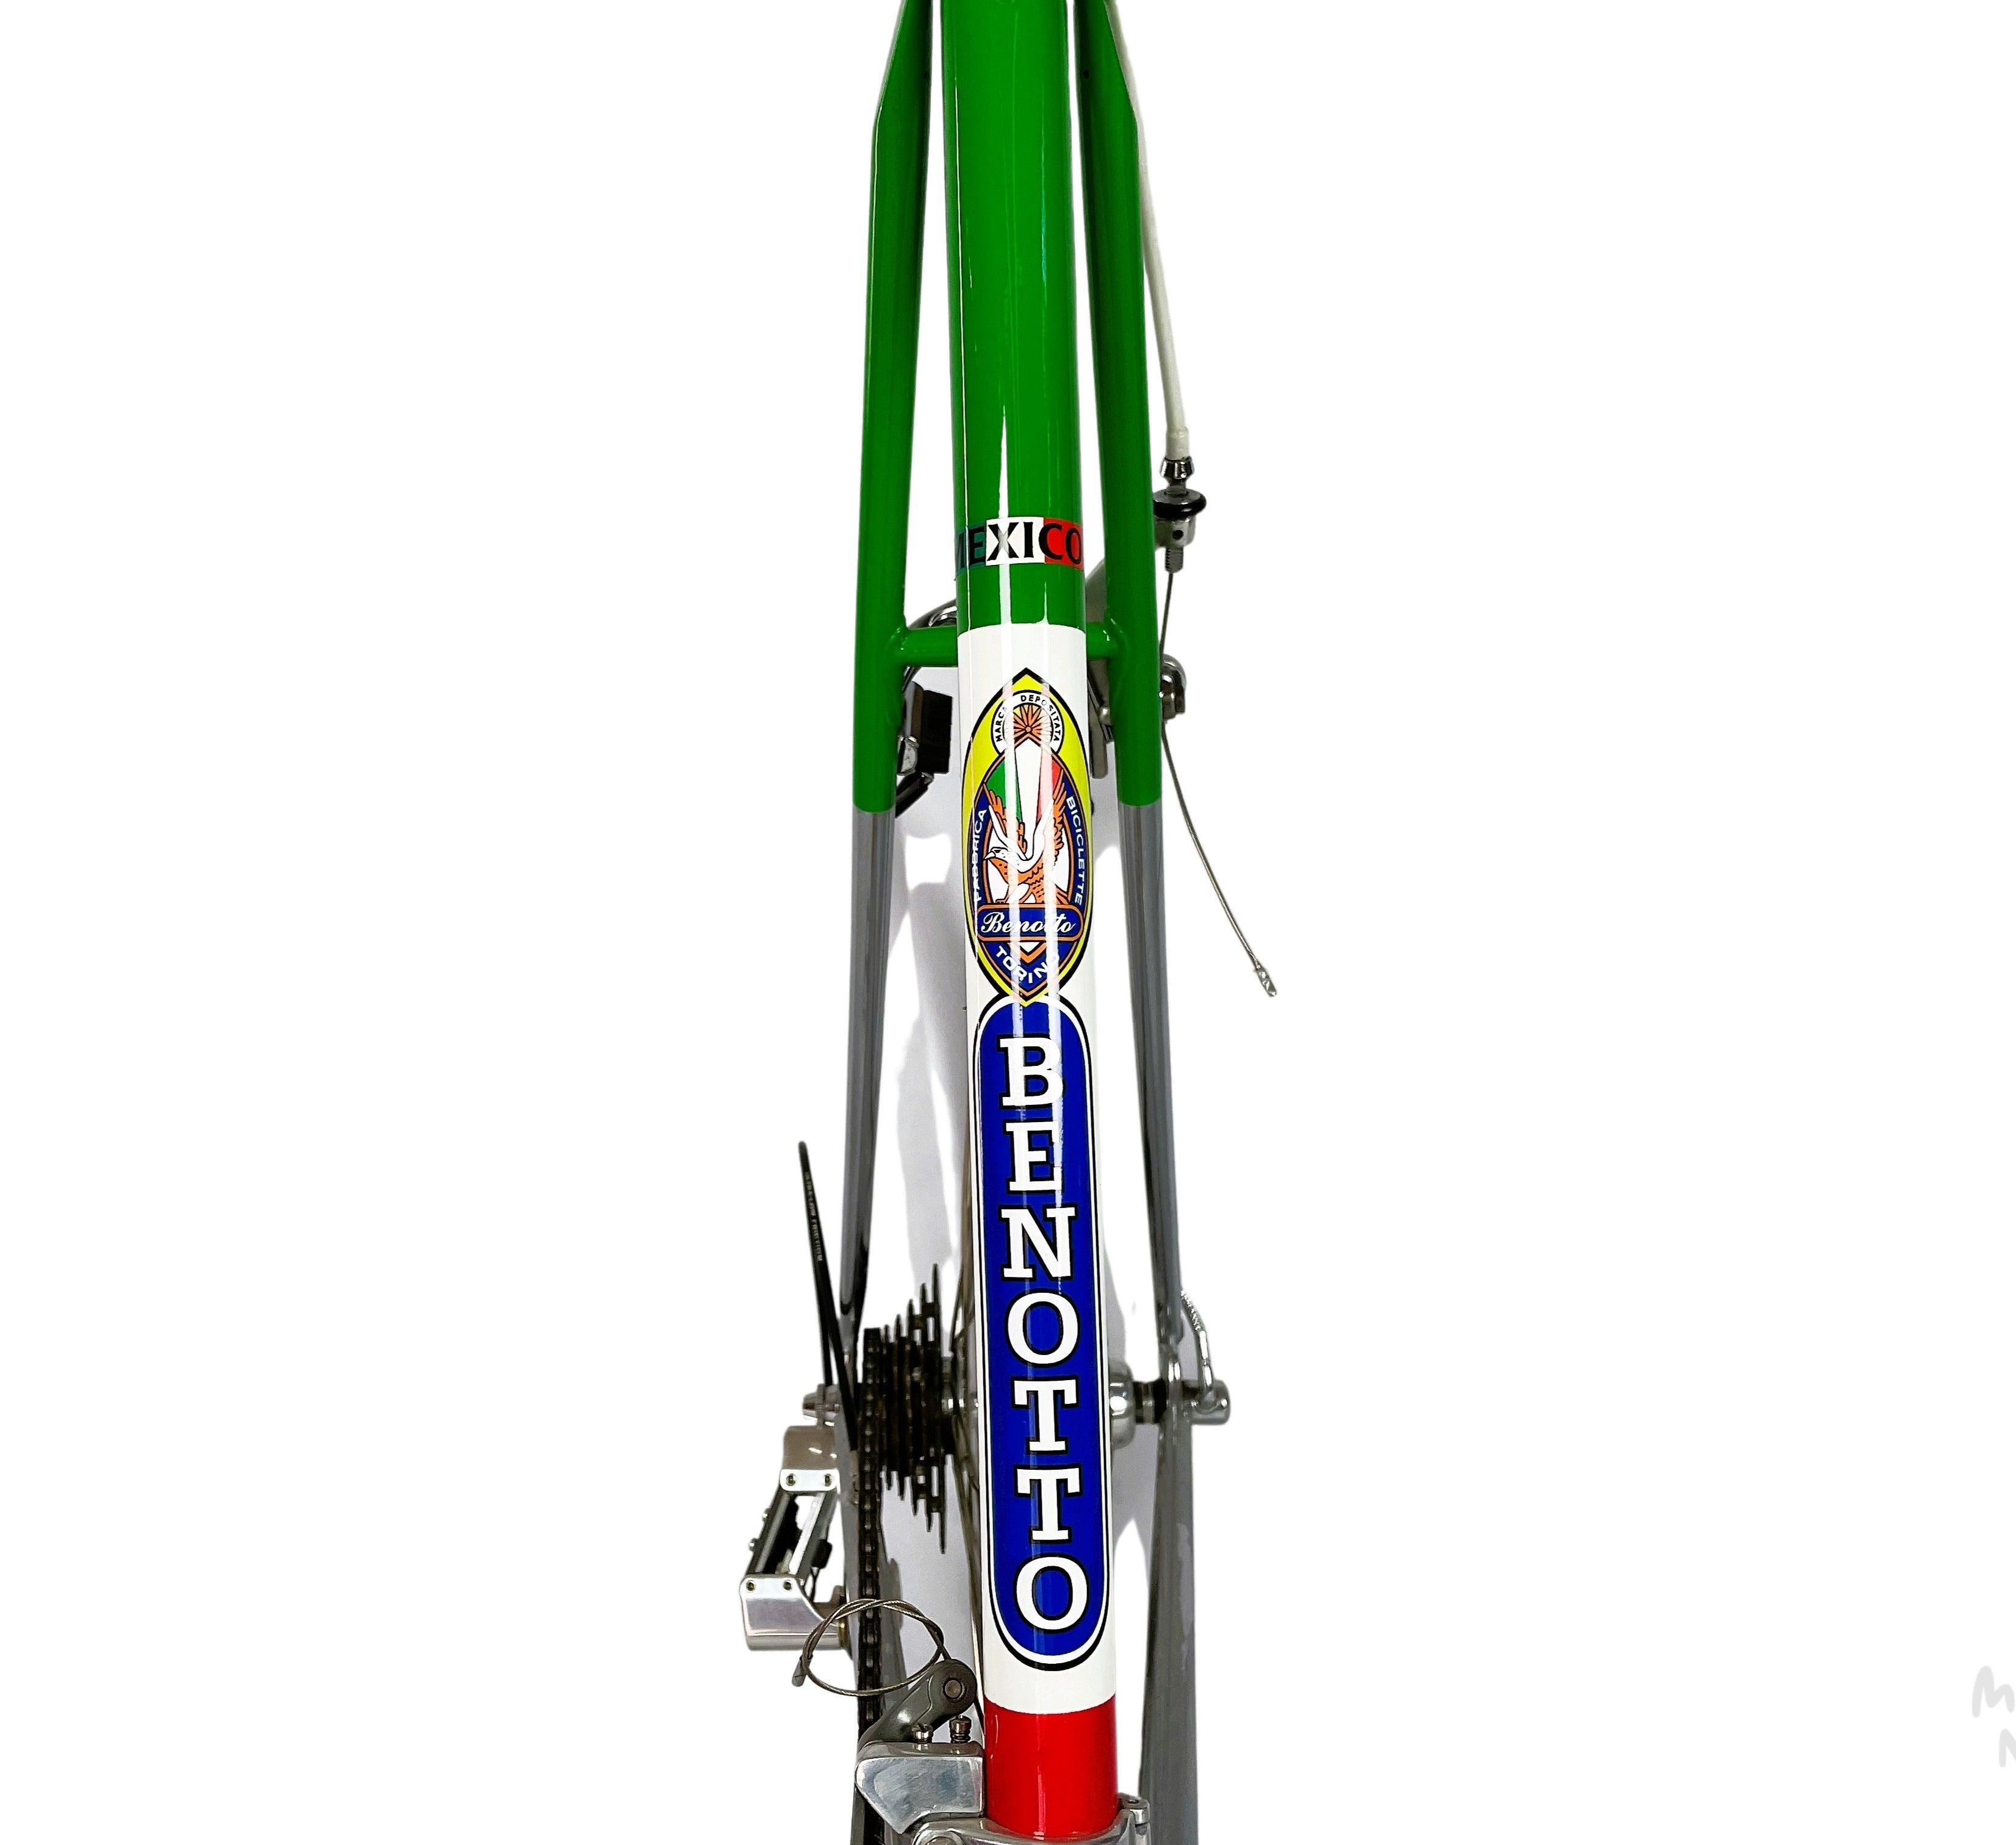 Benotto 1970 - 56 - Bicycles